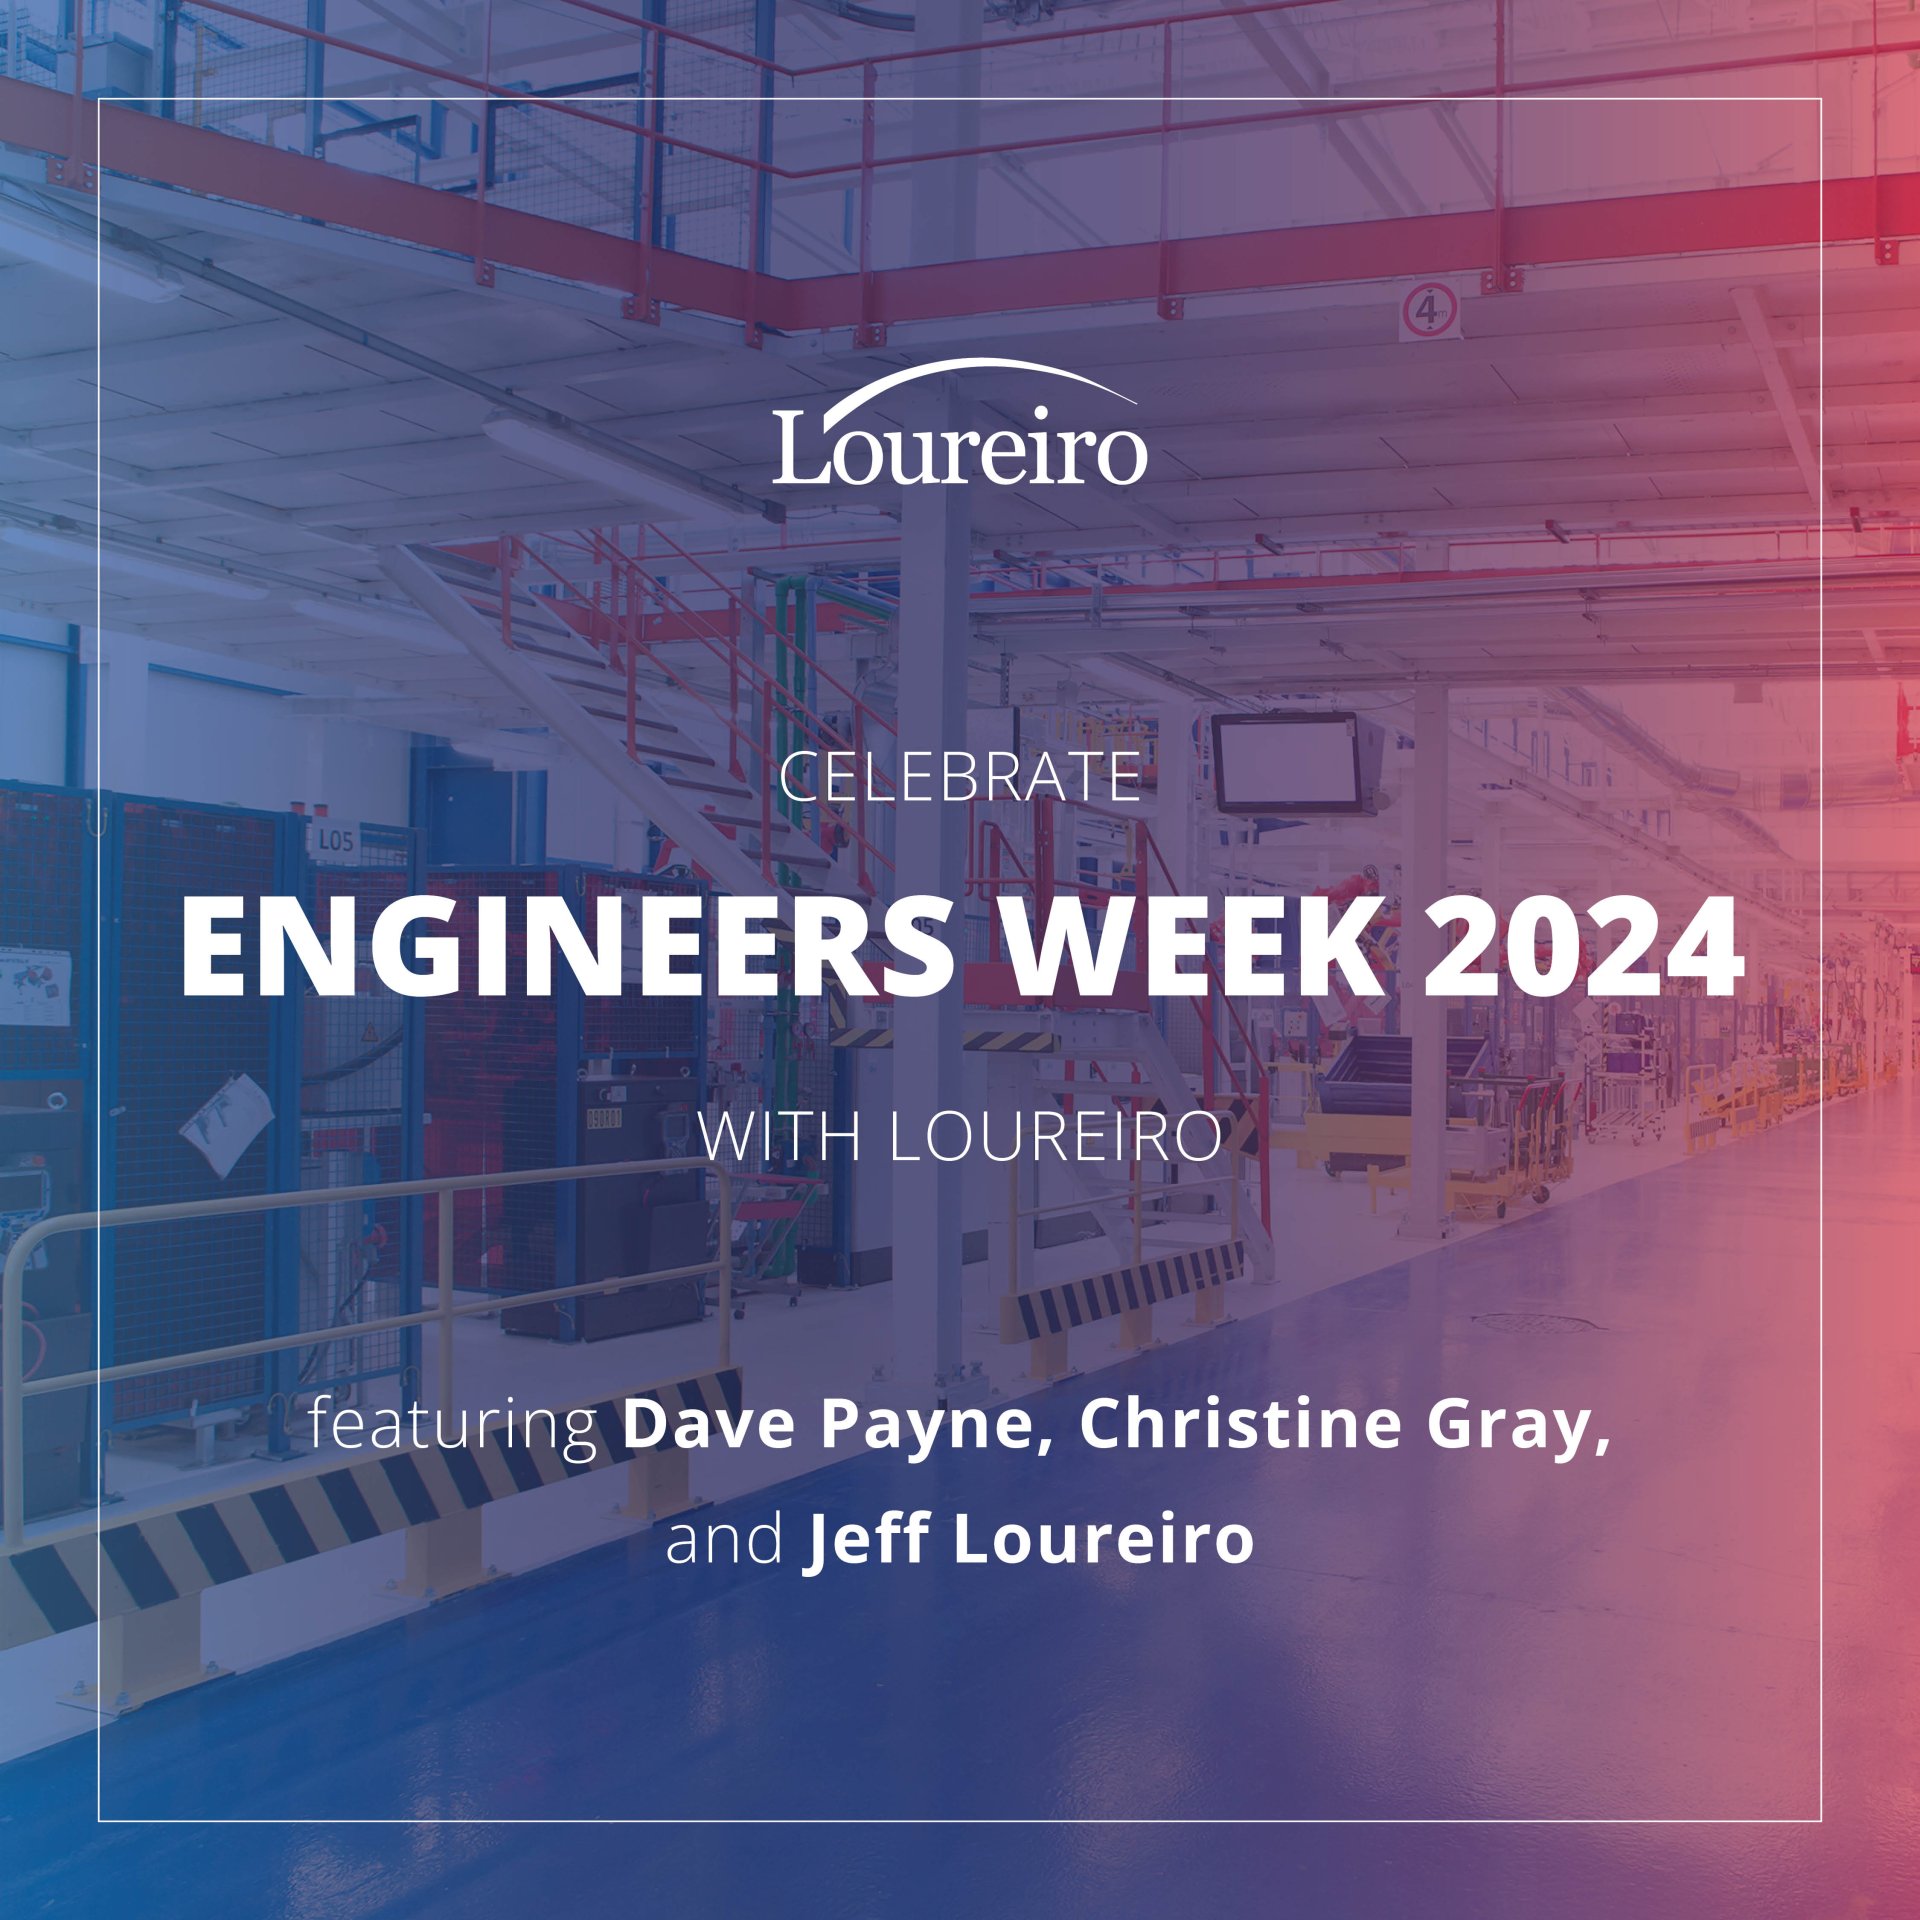 Loureiro Celebrates Engineers Week 2024